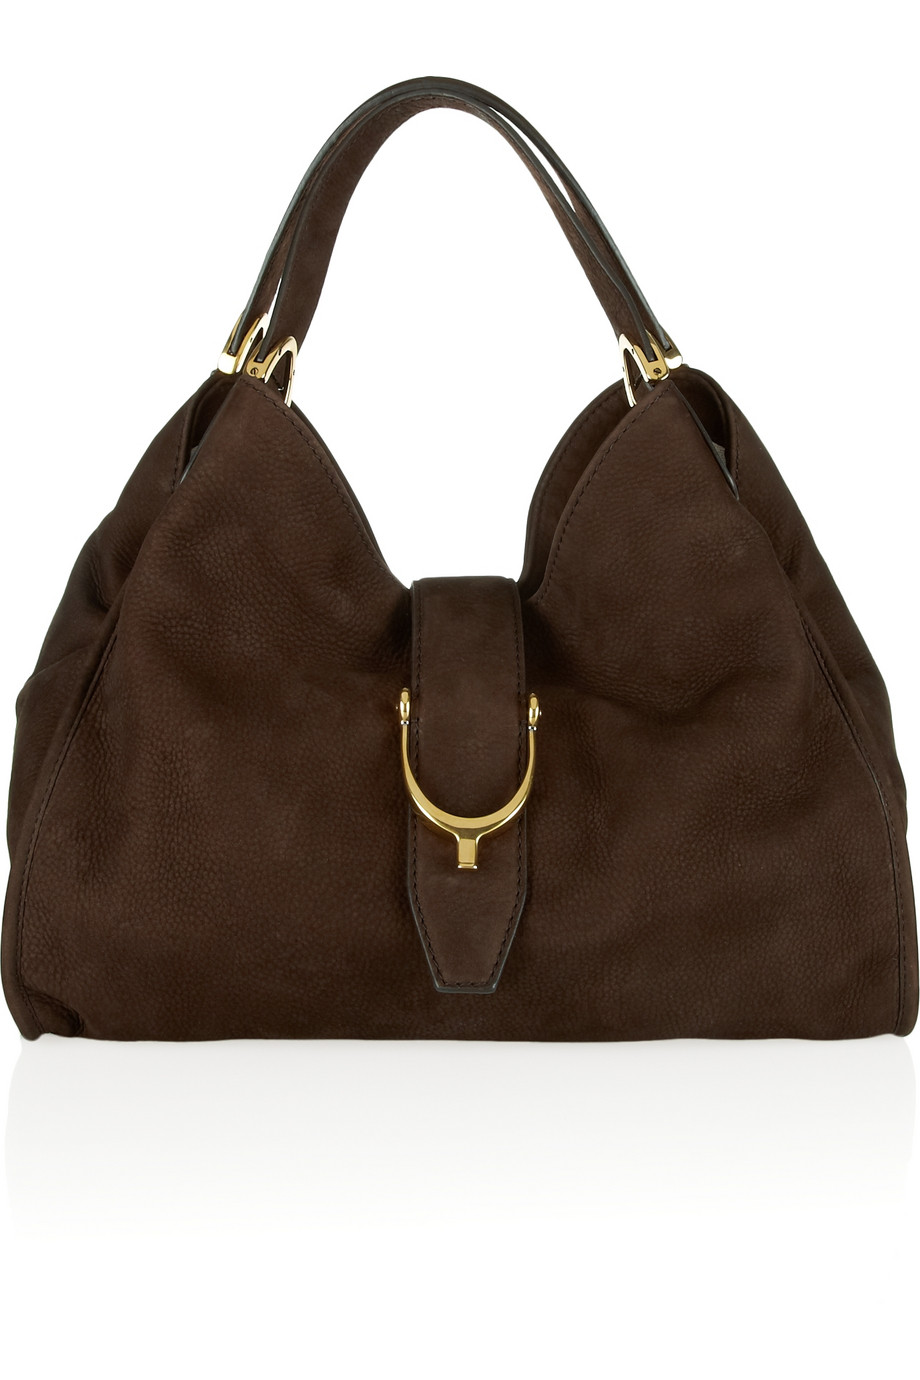 Gucci Soft Stirrup Nubuck Suede Shoulder Bag in Brown - Lyst